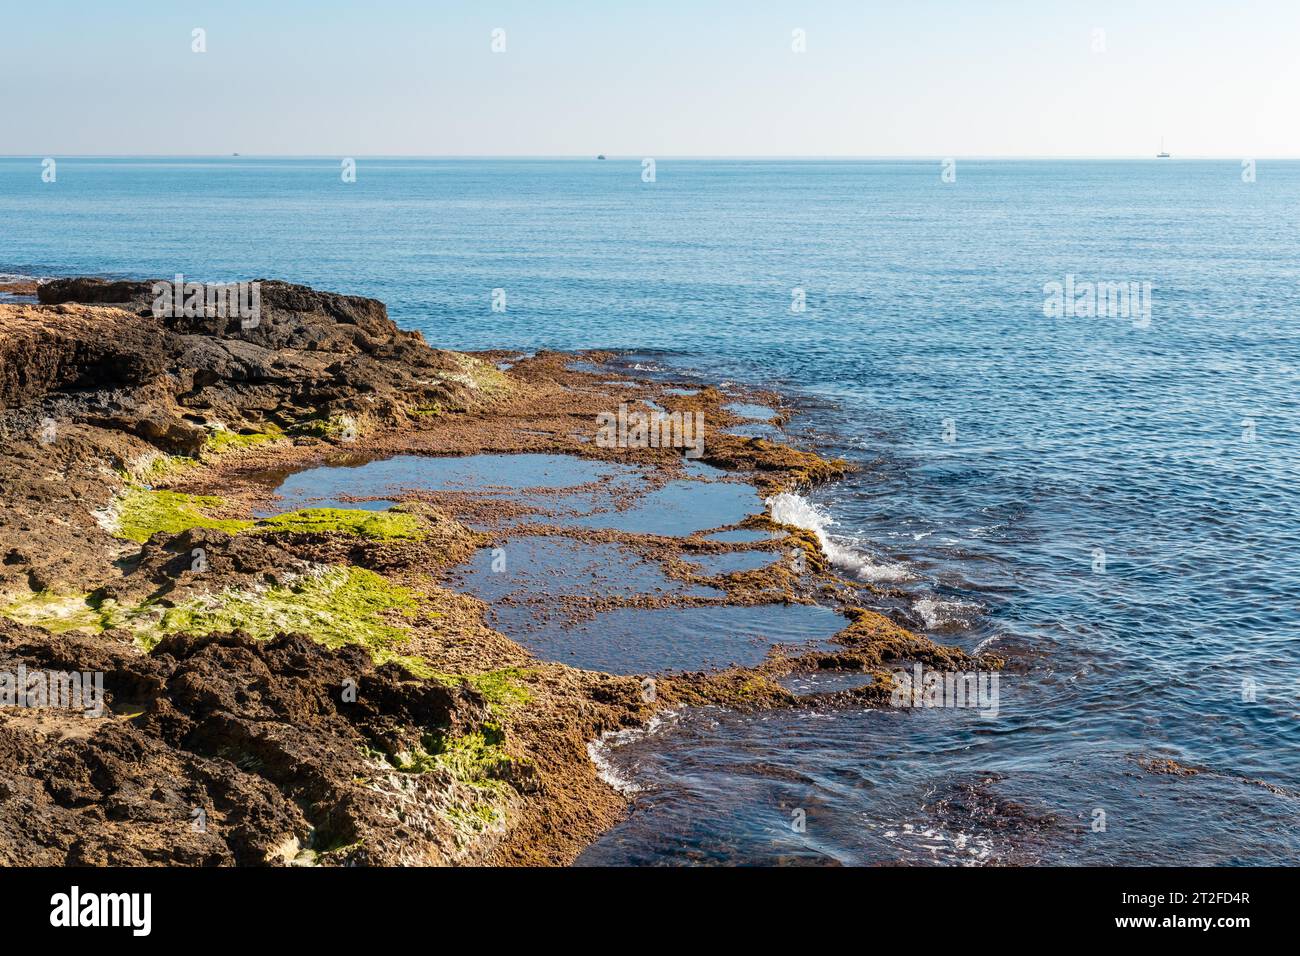 Kostbare Felsen am Meer in der Küstenstadt Torrevieja, Alicante, Valencianische Gemeinschaft. Spanien, Mittelmeer an der Costa Blanca Stockfoto